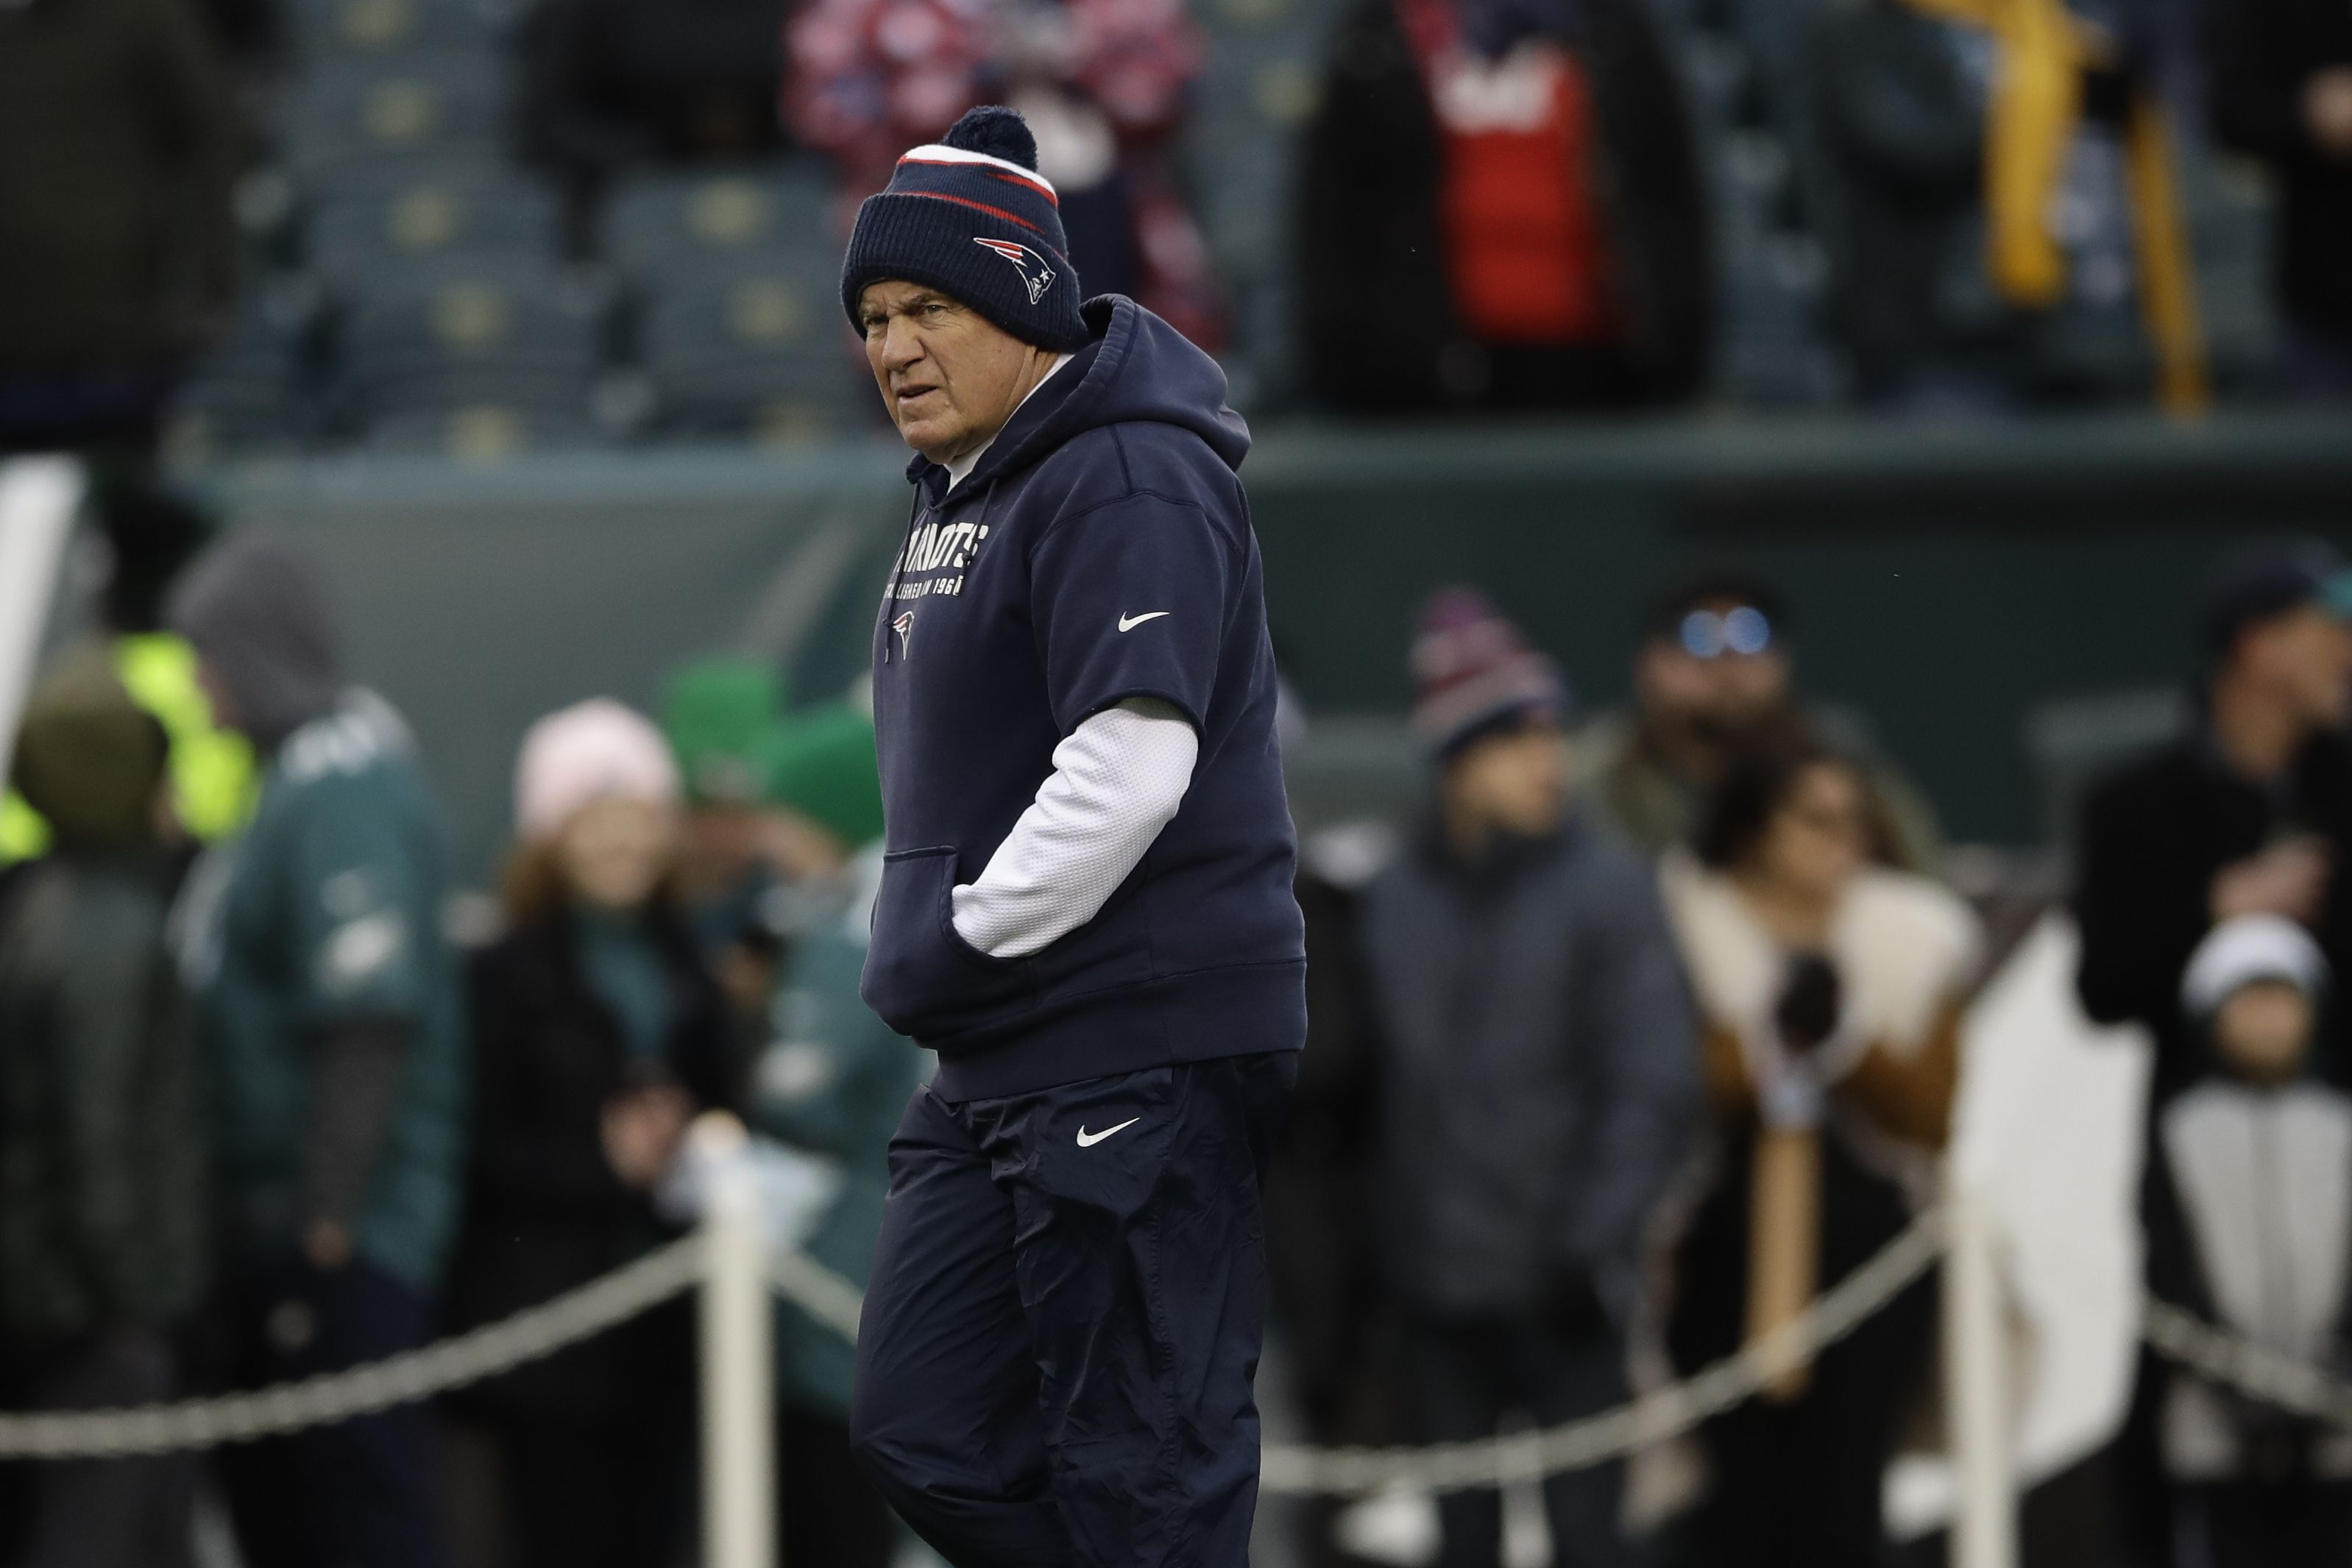 Bill Belichick isn't wearing NFL's camo gear, here's why according